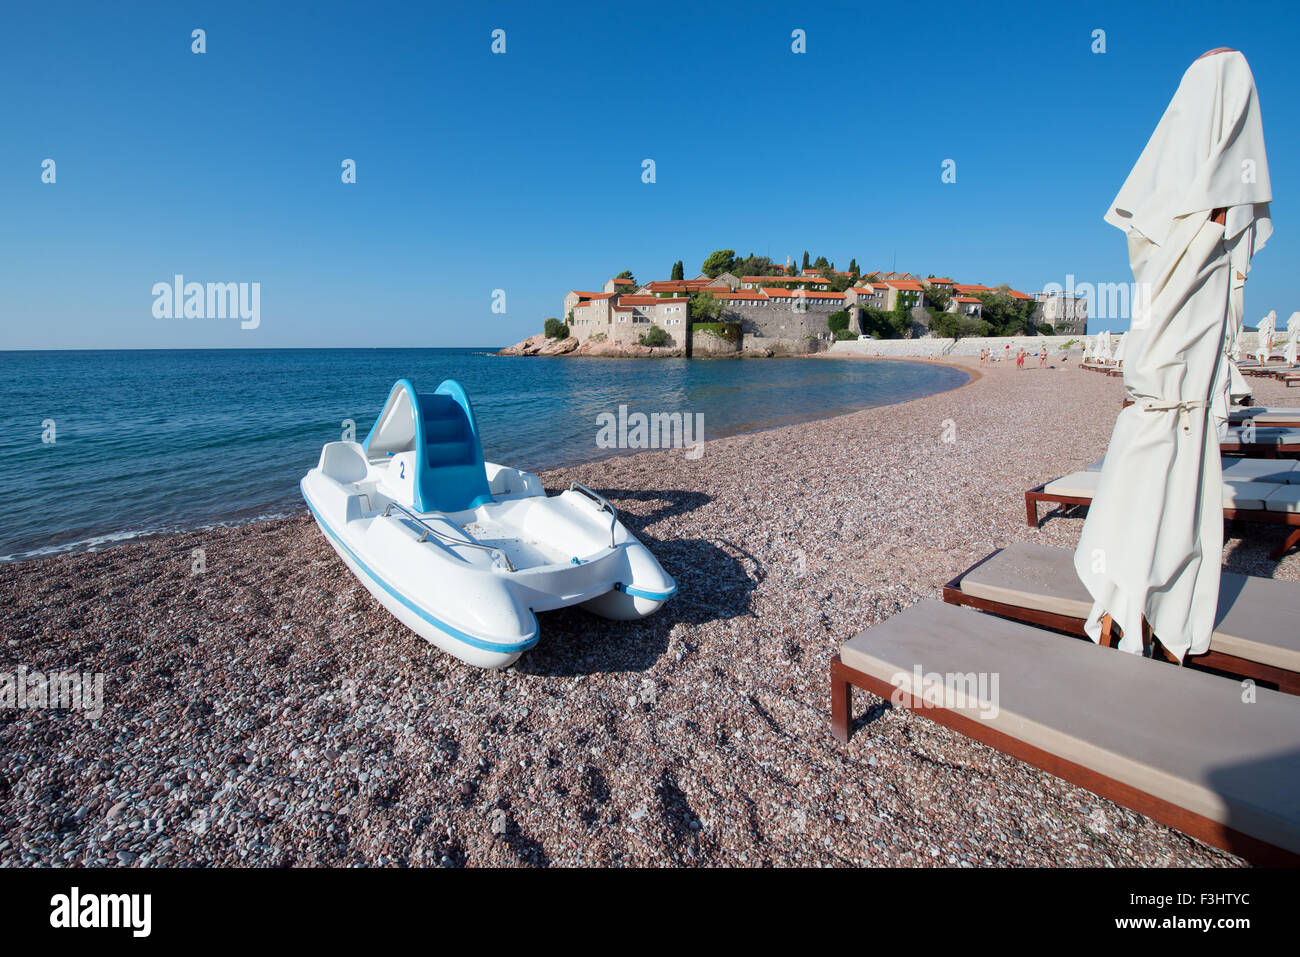 A catamaran and sun umbrellas on the beach in front of Sveti Stefan (Saint Stephen) islet and hotel resort, Montenegro Stock Photo